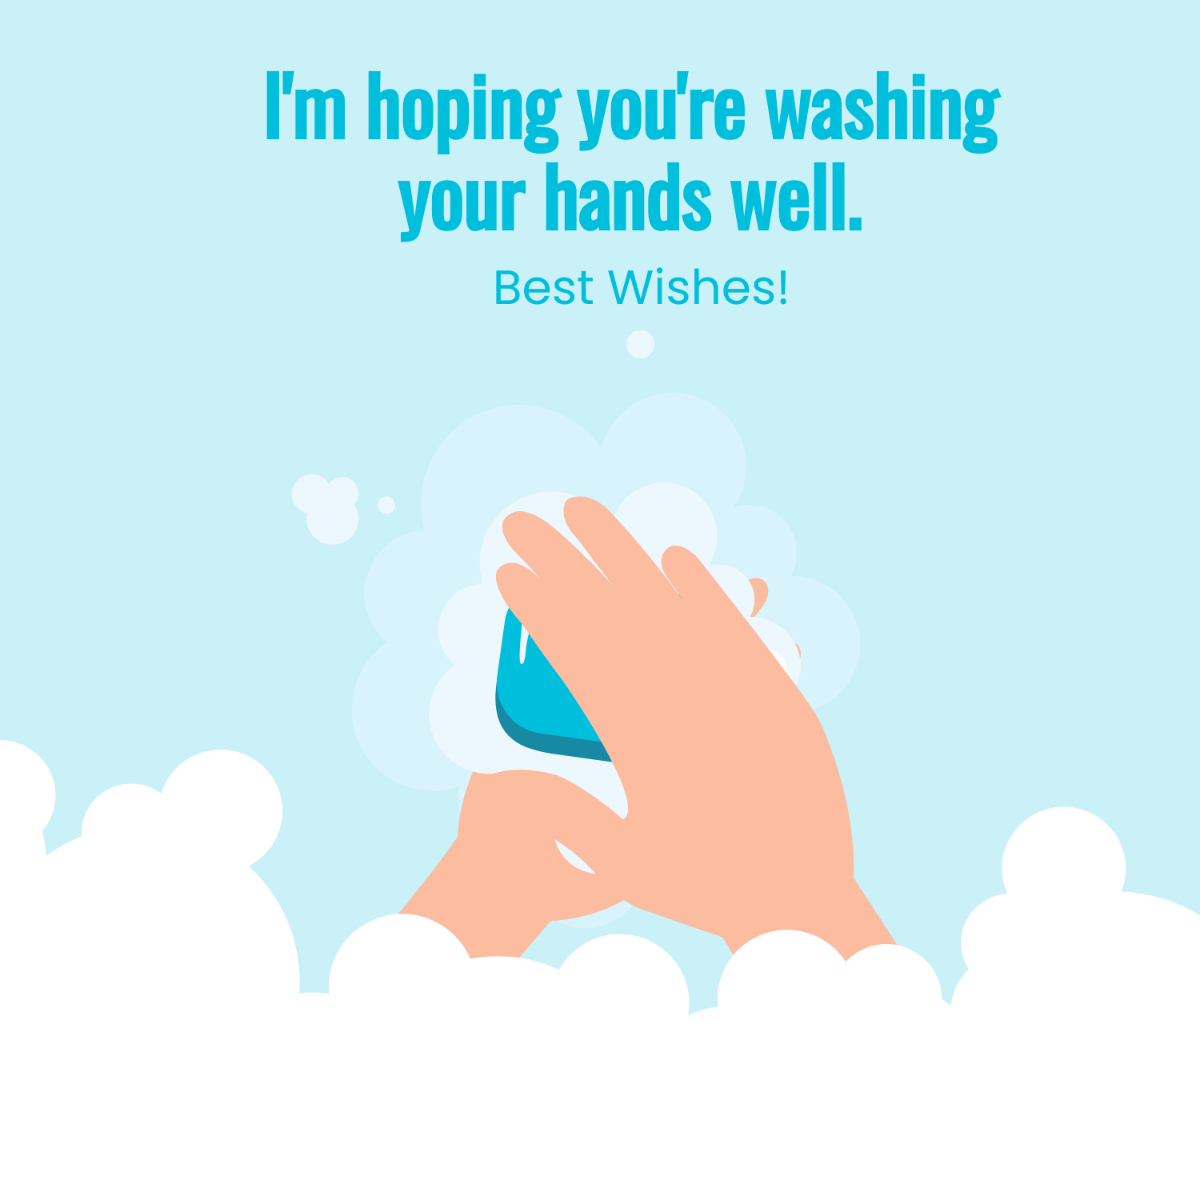 Global Handwashing Day Wishes Vector